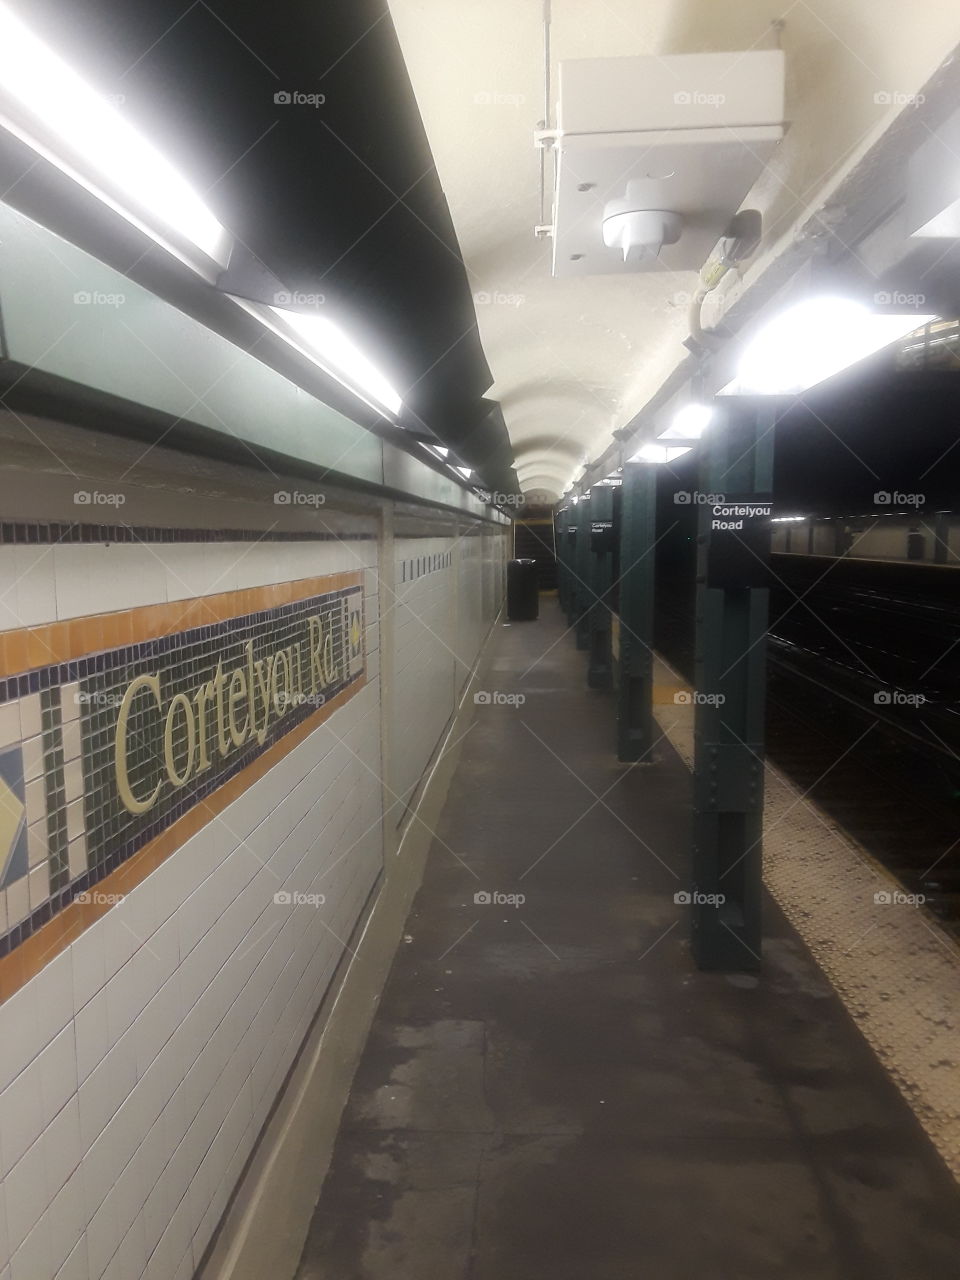 Cortelyou Rd Station platform, Brooklyn New York